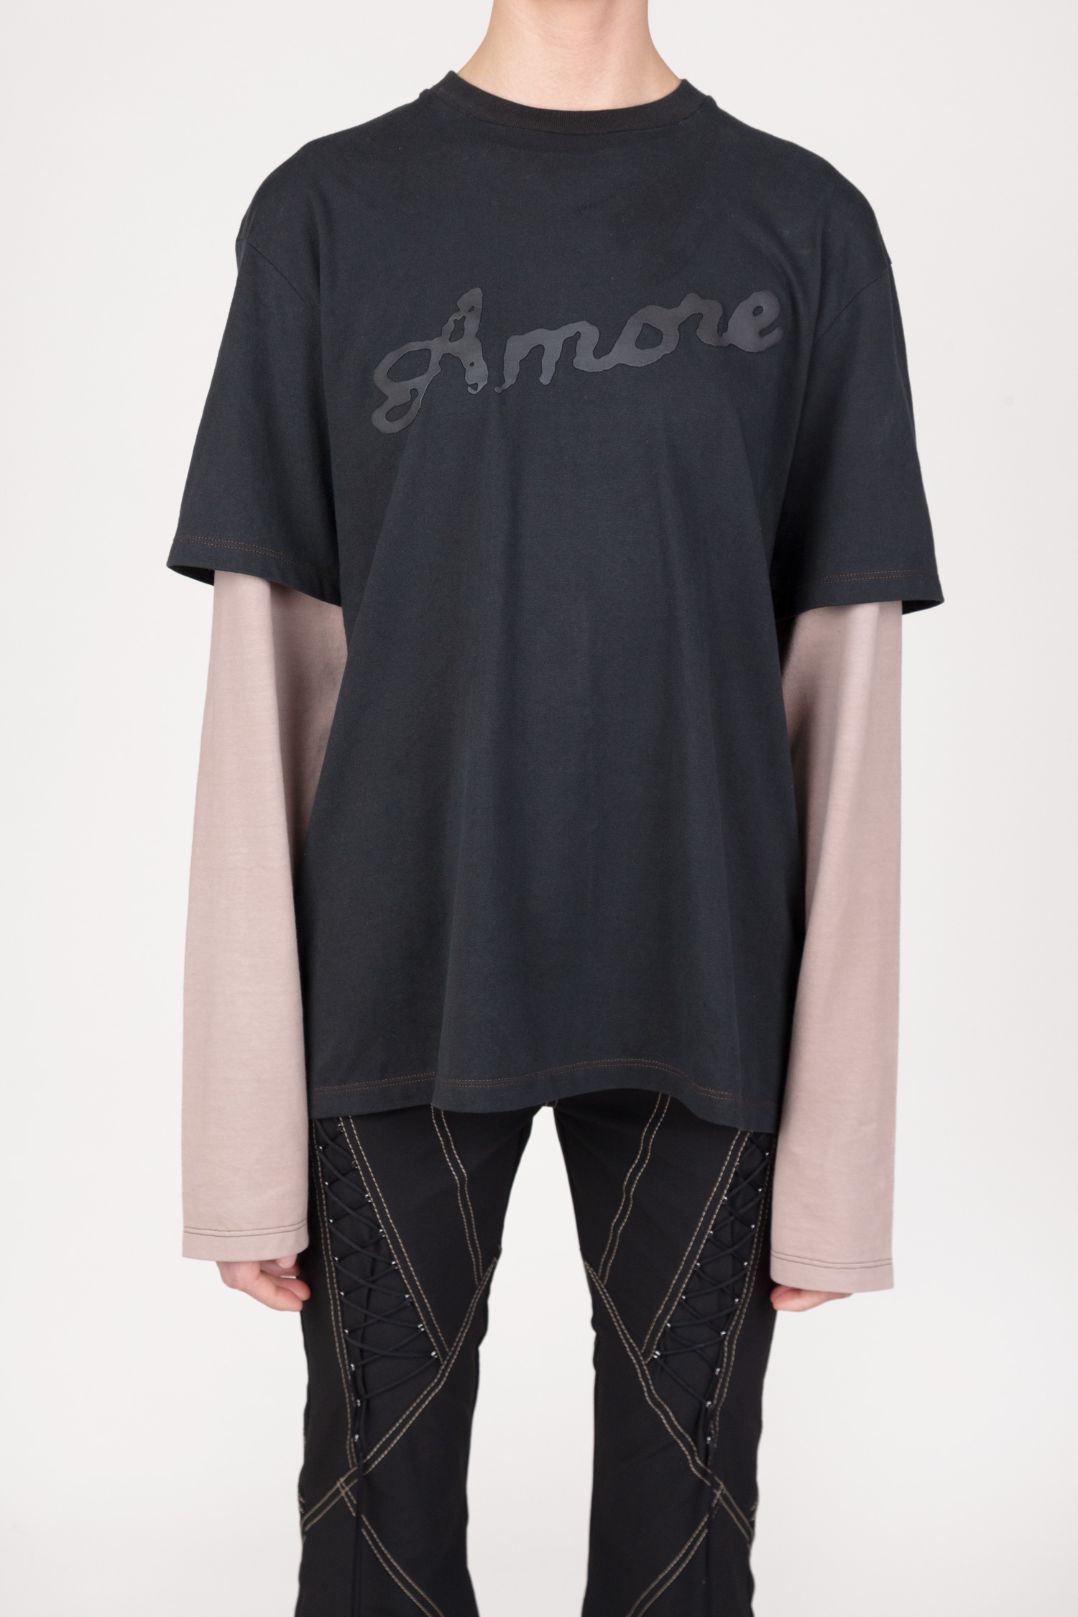 Amore Print Short Long Sleeve Oversized Tee